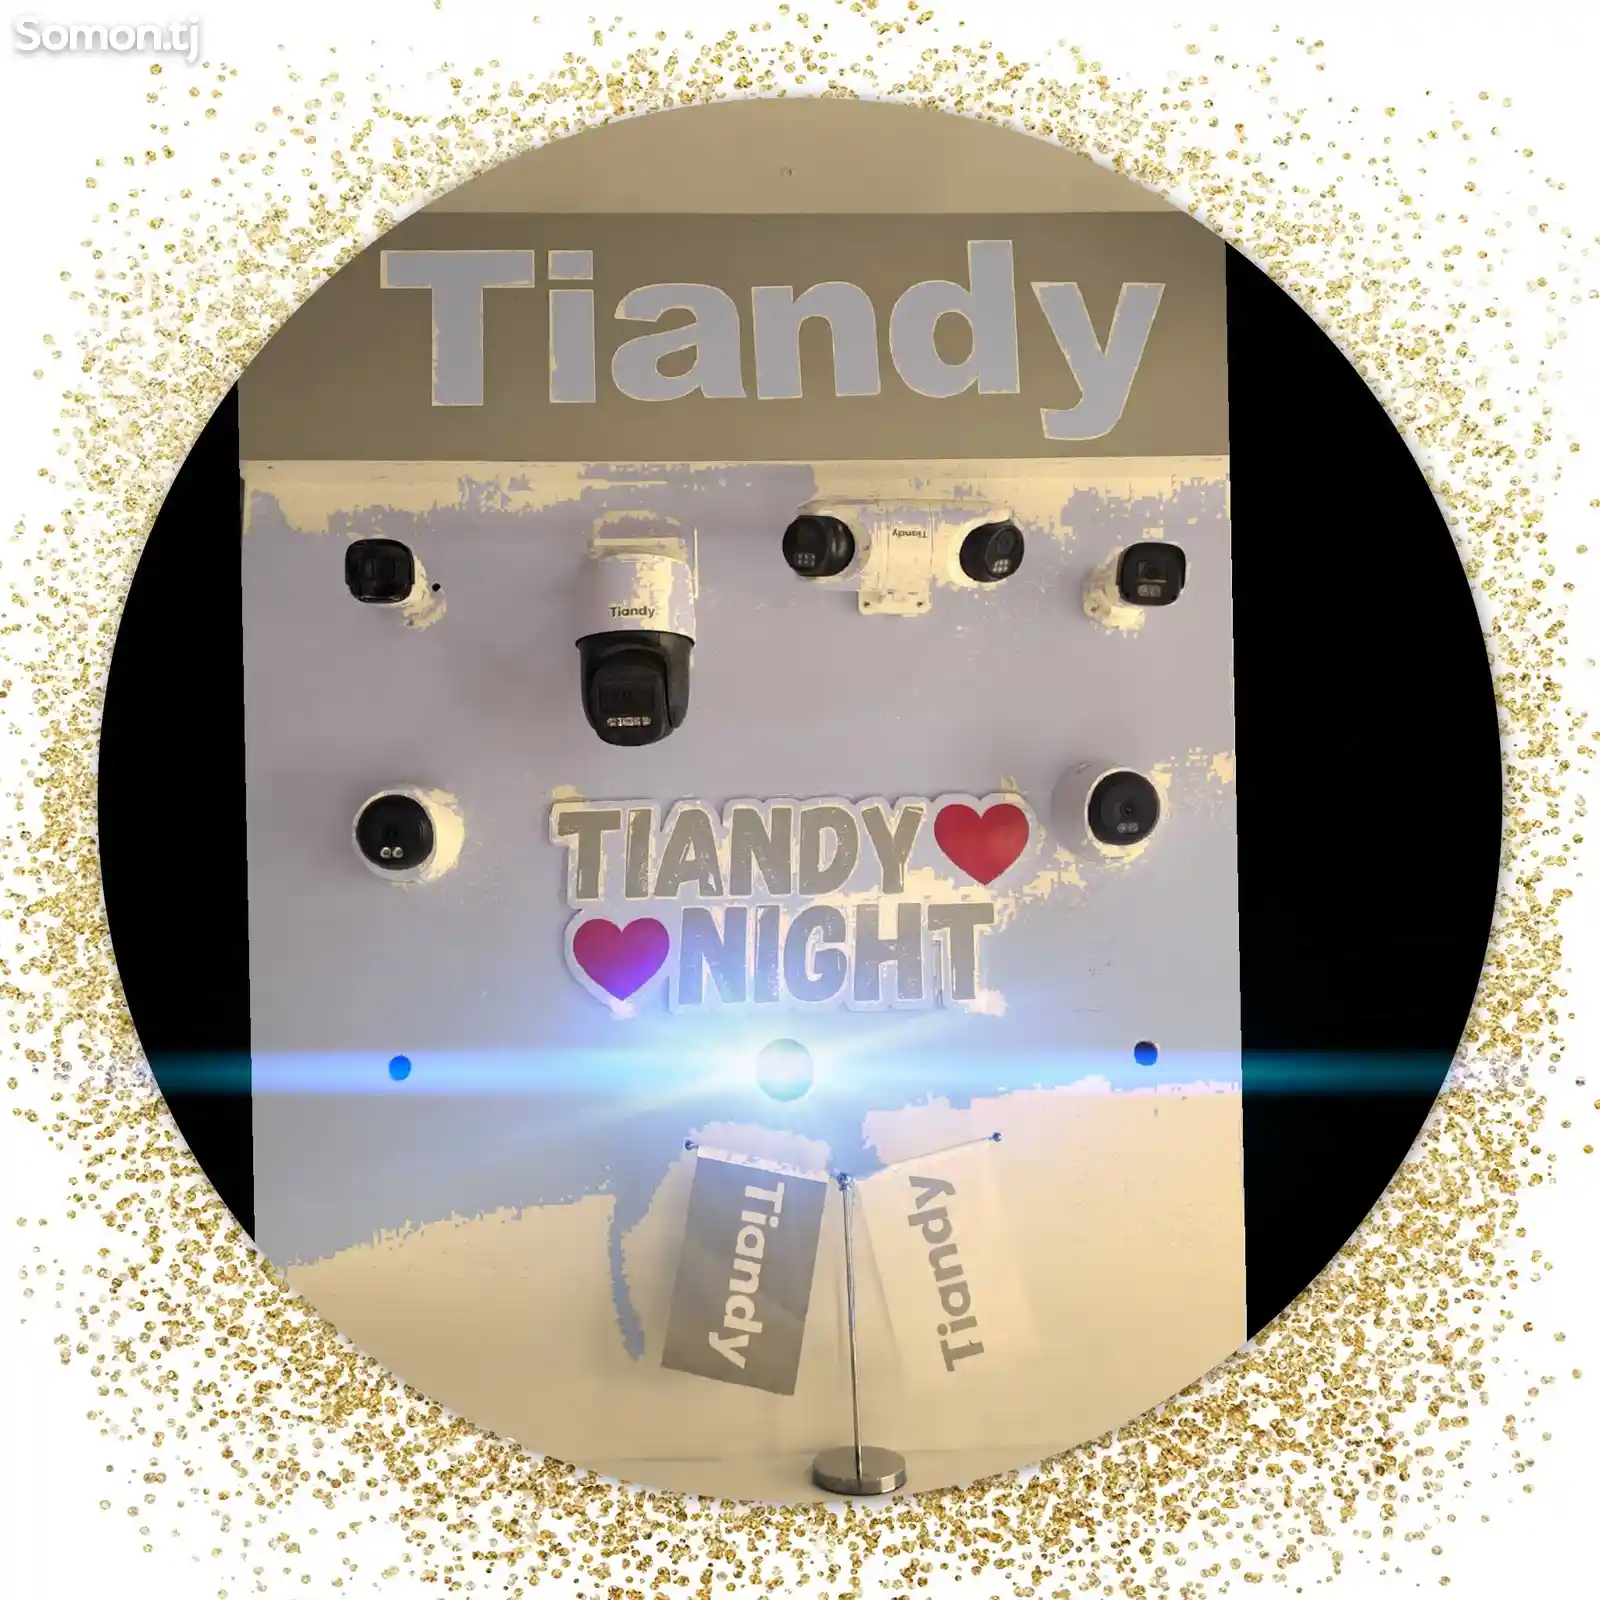 Tiandy Camera-1